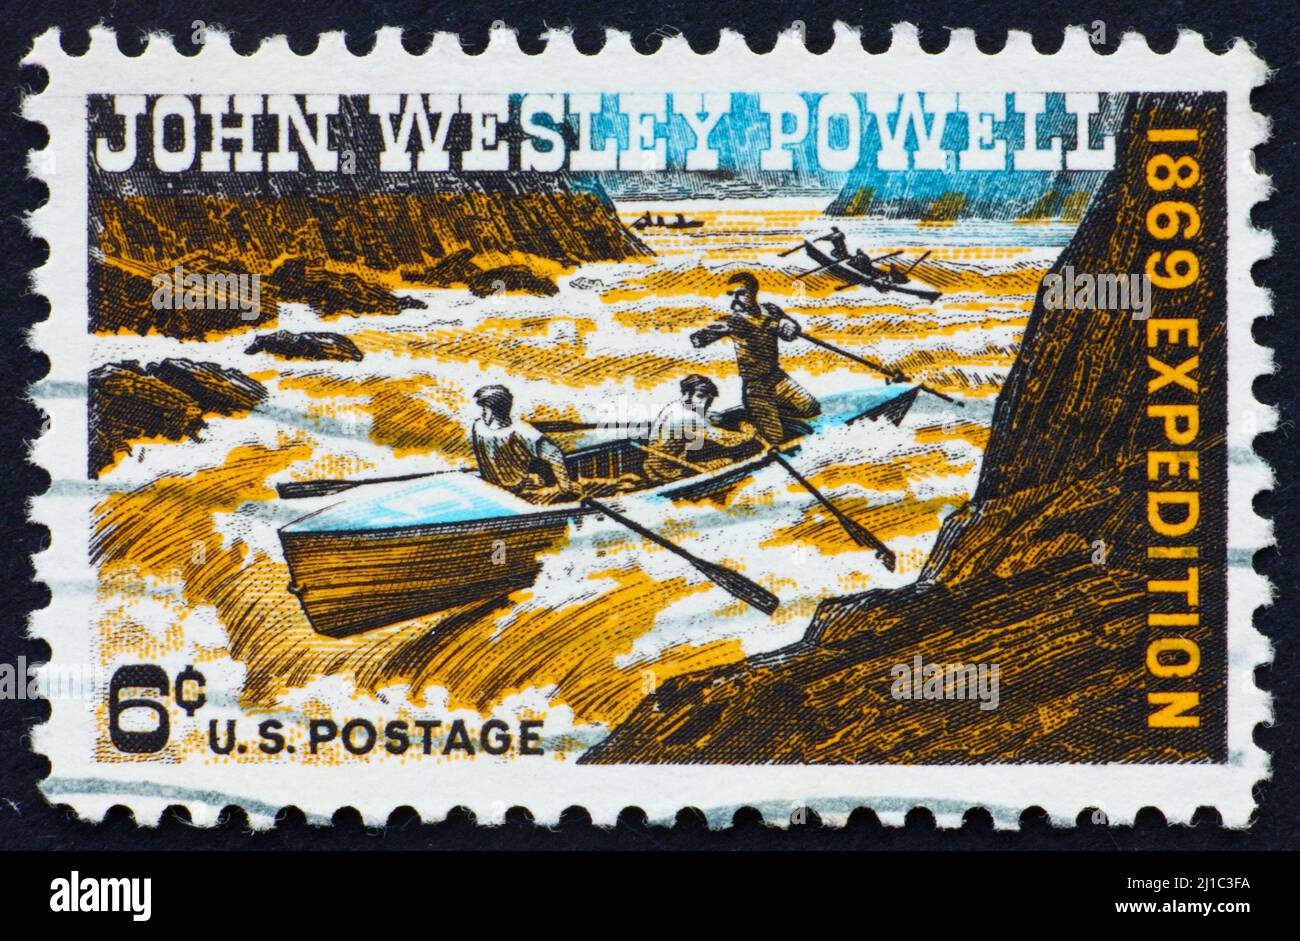 UNITED STATES OF AMERICA - CIRCA 1969: a stamp printed in the United States of America shows John Wesley Powell Exploring Colorado River, circa 1969 Stock Photo